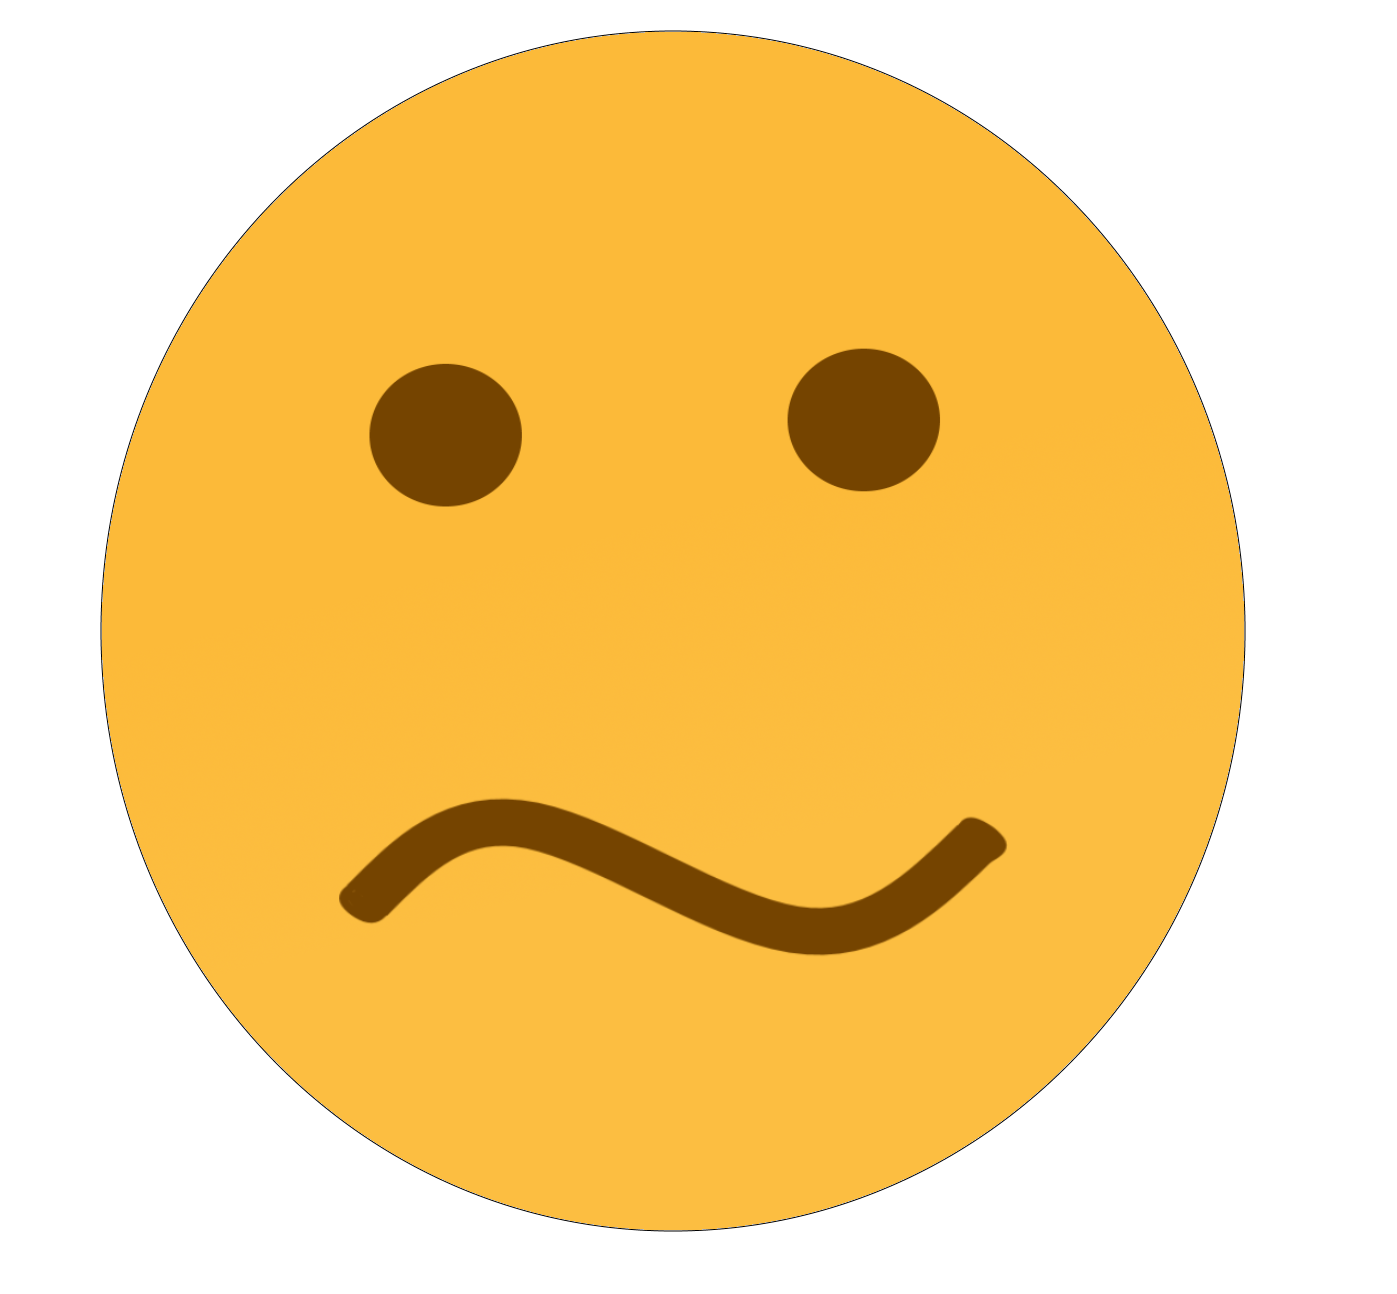 Download PNG image - Yellow Face Emoji PNG Image 